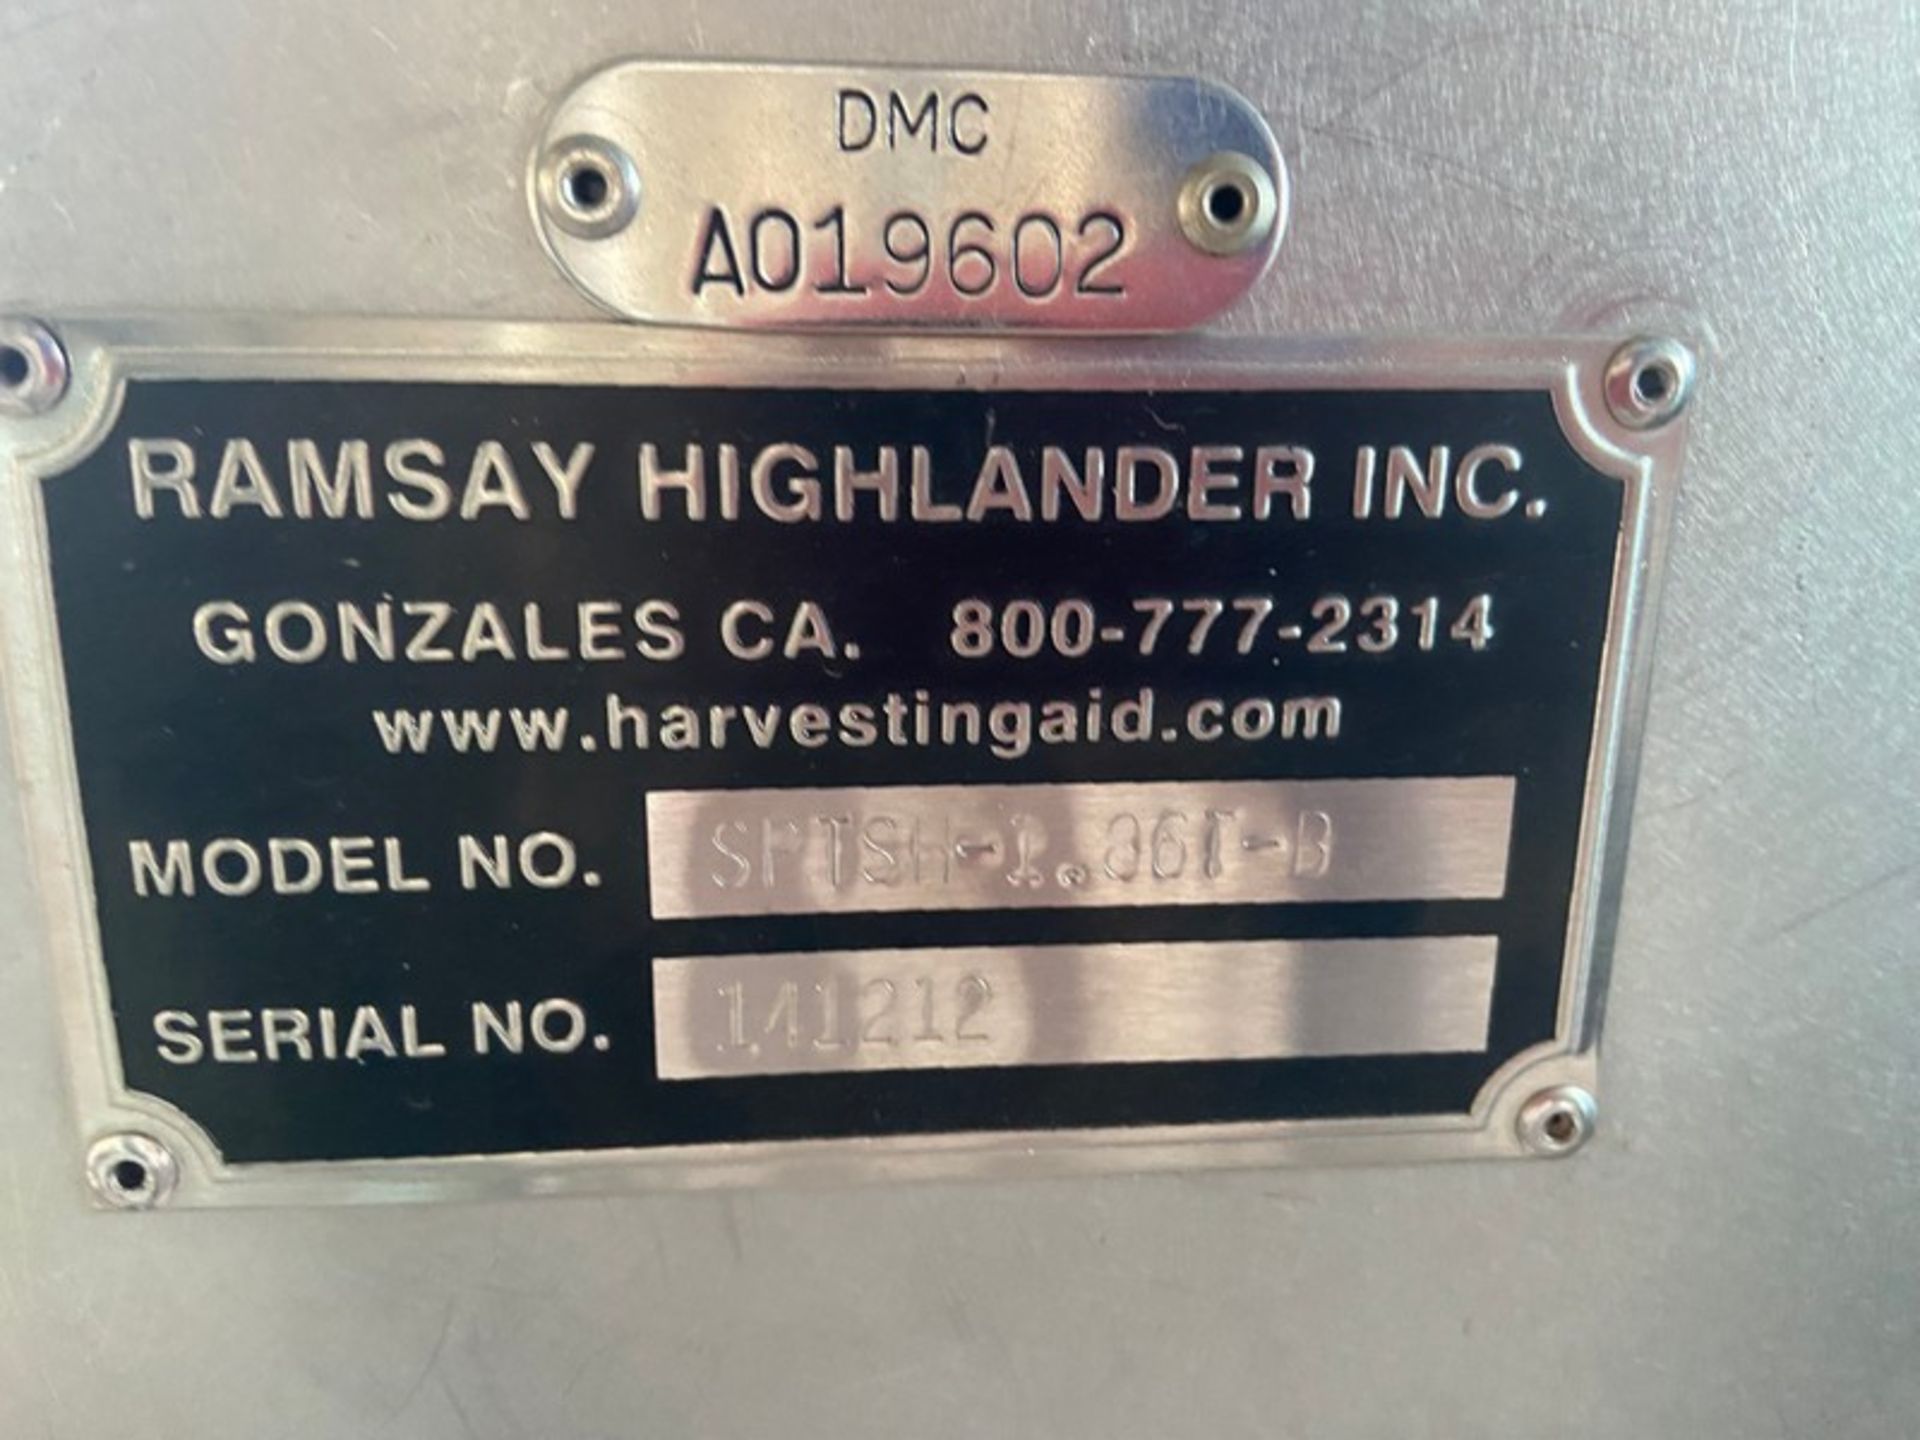 Ramsay Highlander Inc. Harvester, M/N SPTSH-1.86T-B, S/N 141212, Side Conveyor with Track, with John - Image 18 of 26